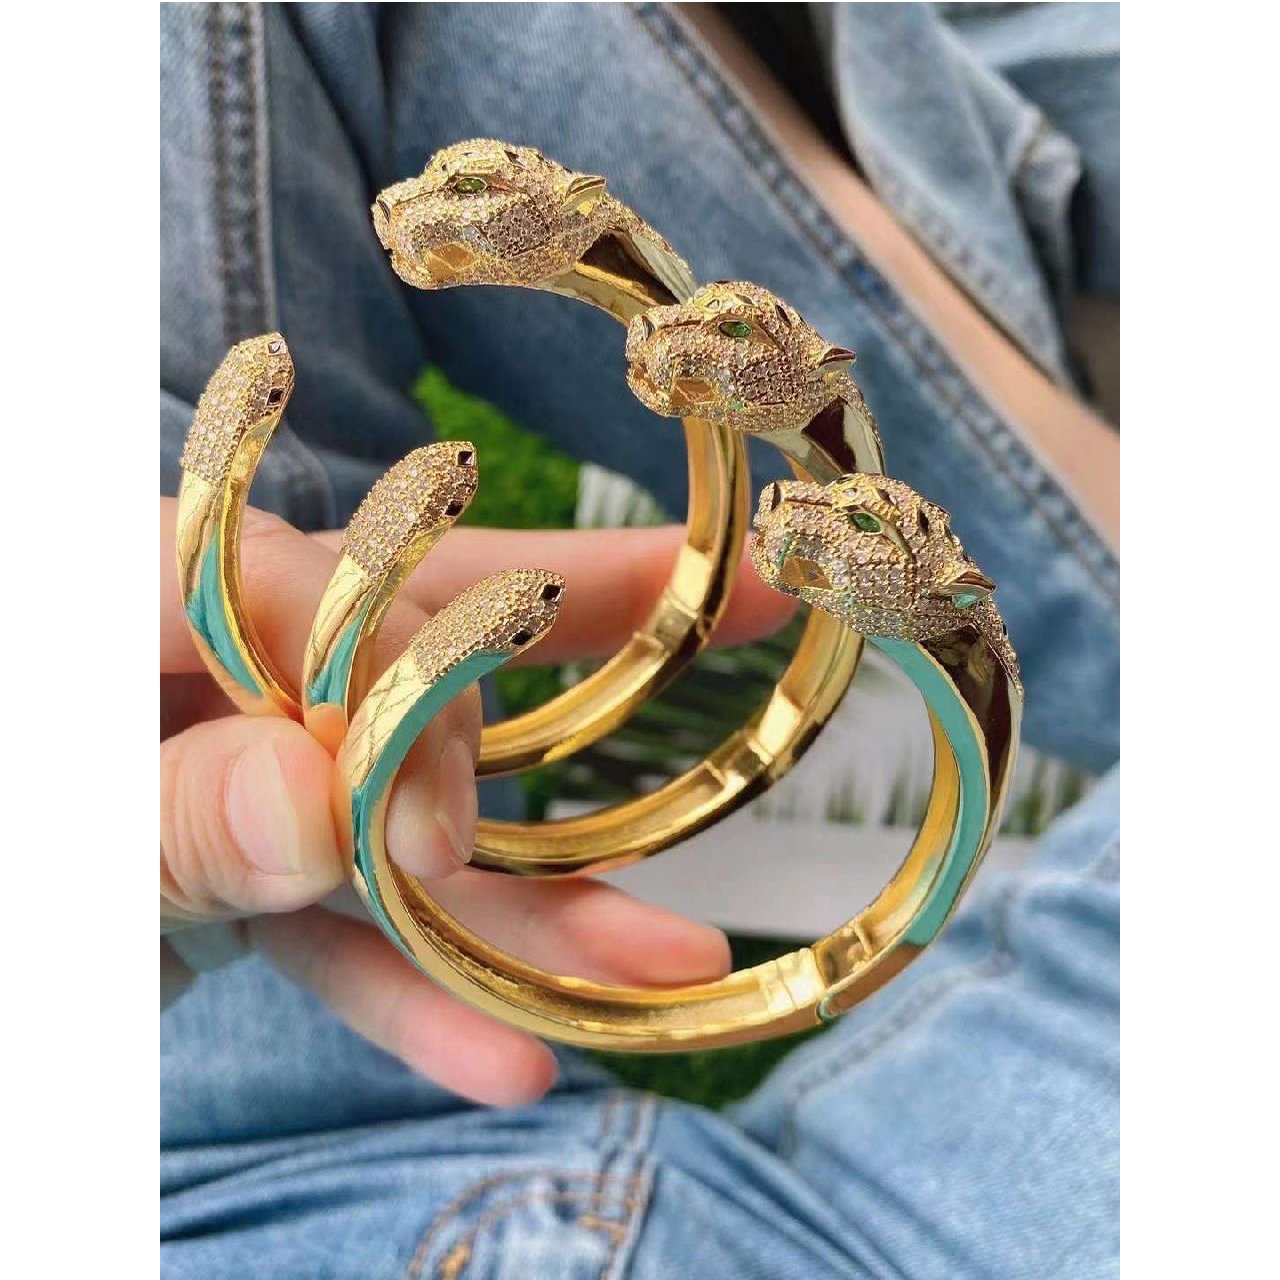 Gold snake bracelets egypt hi-res stock photography and images - Alamy